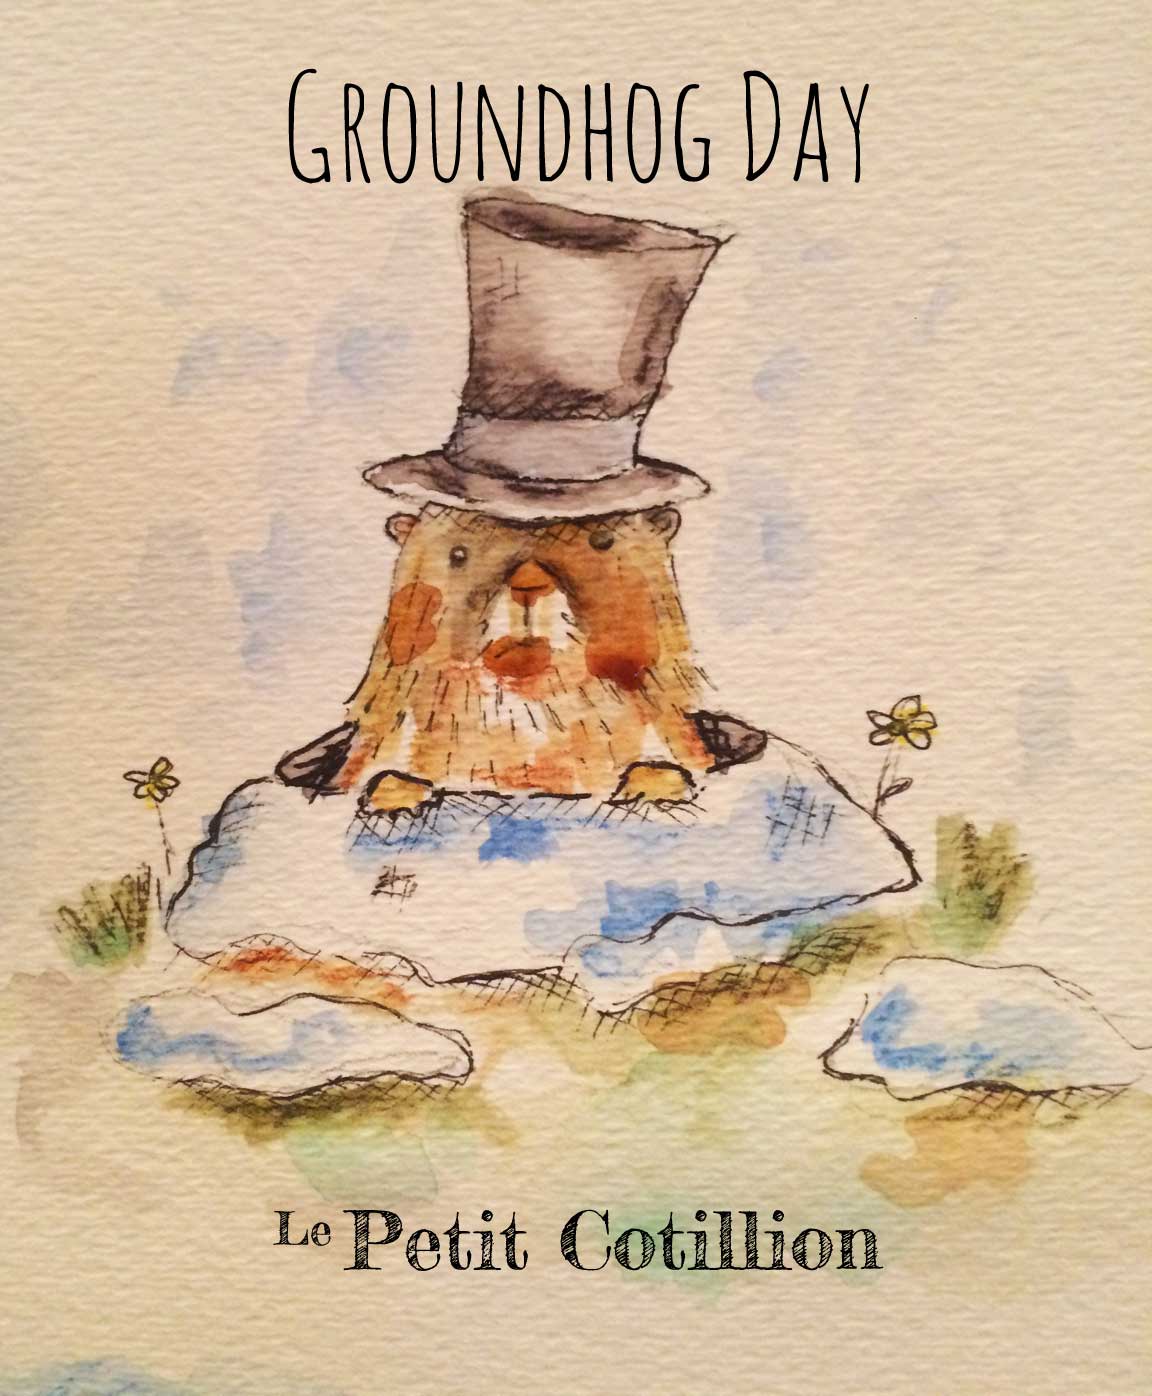 Groundhog Day | Celebrating Punxsutawney Phil